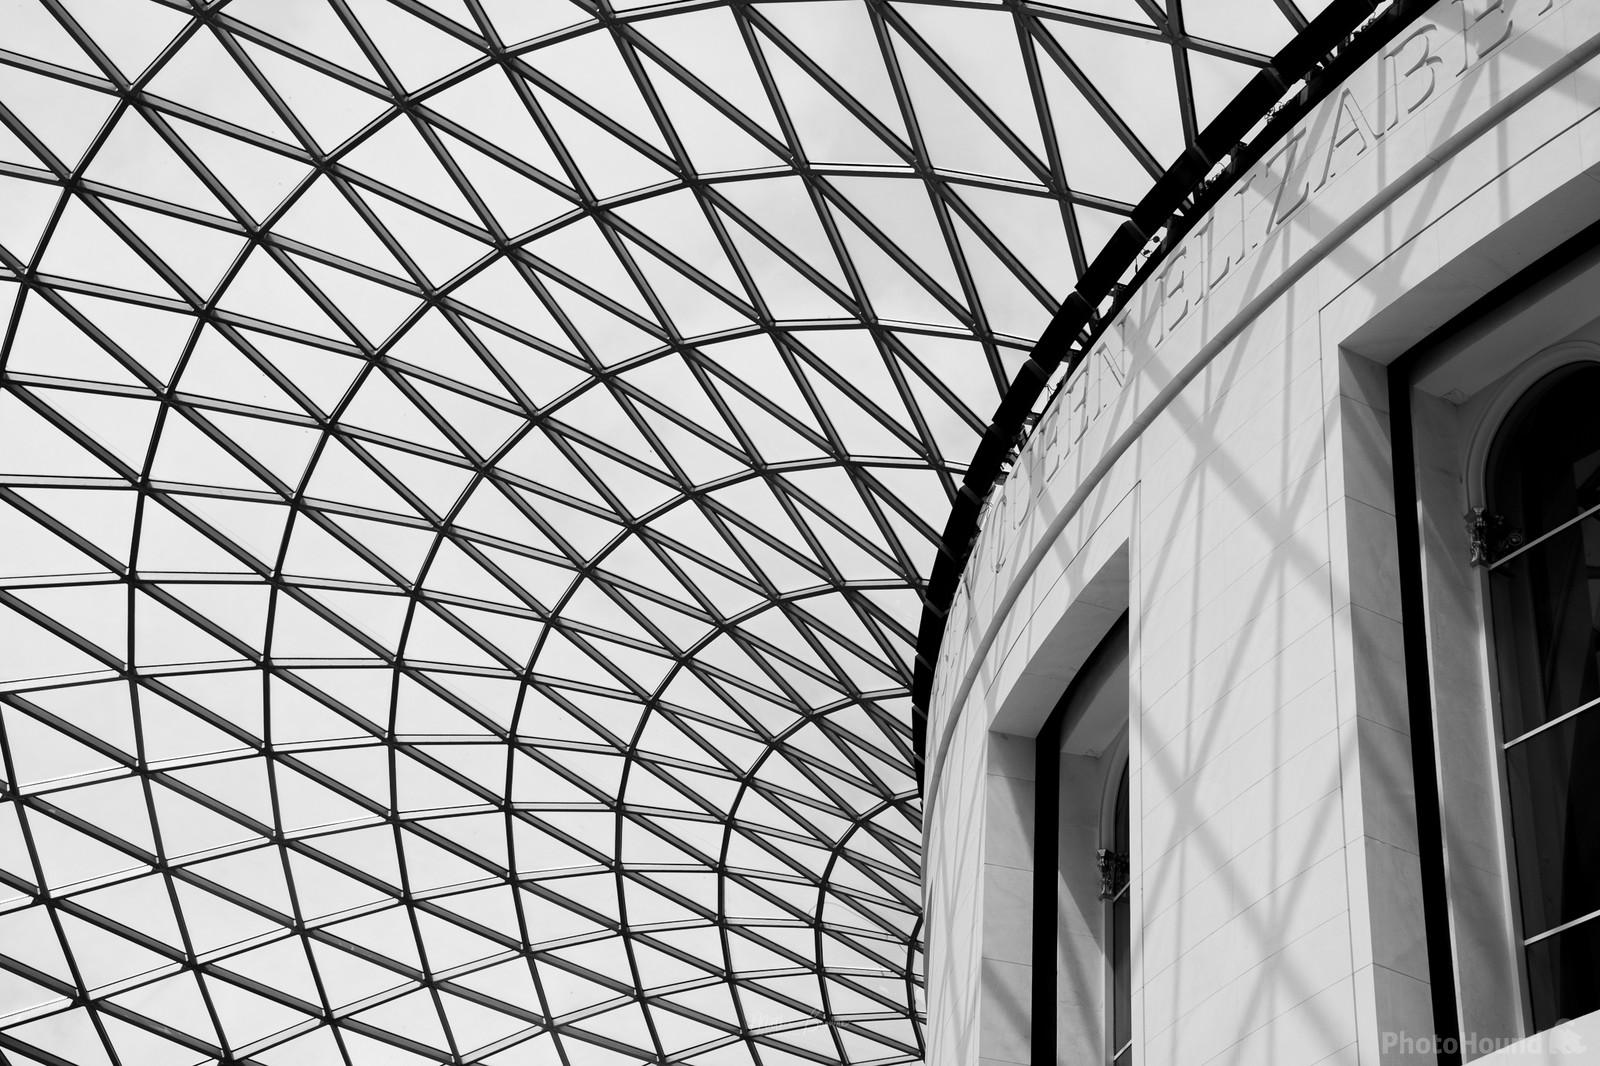 Image of British Museum by Mathew Browne